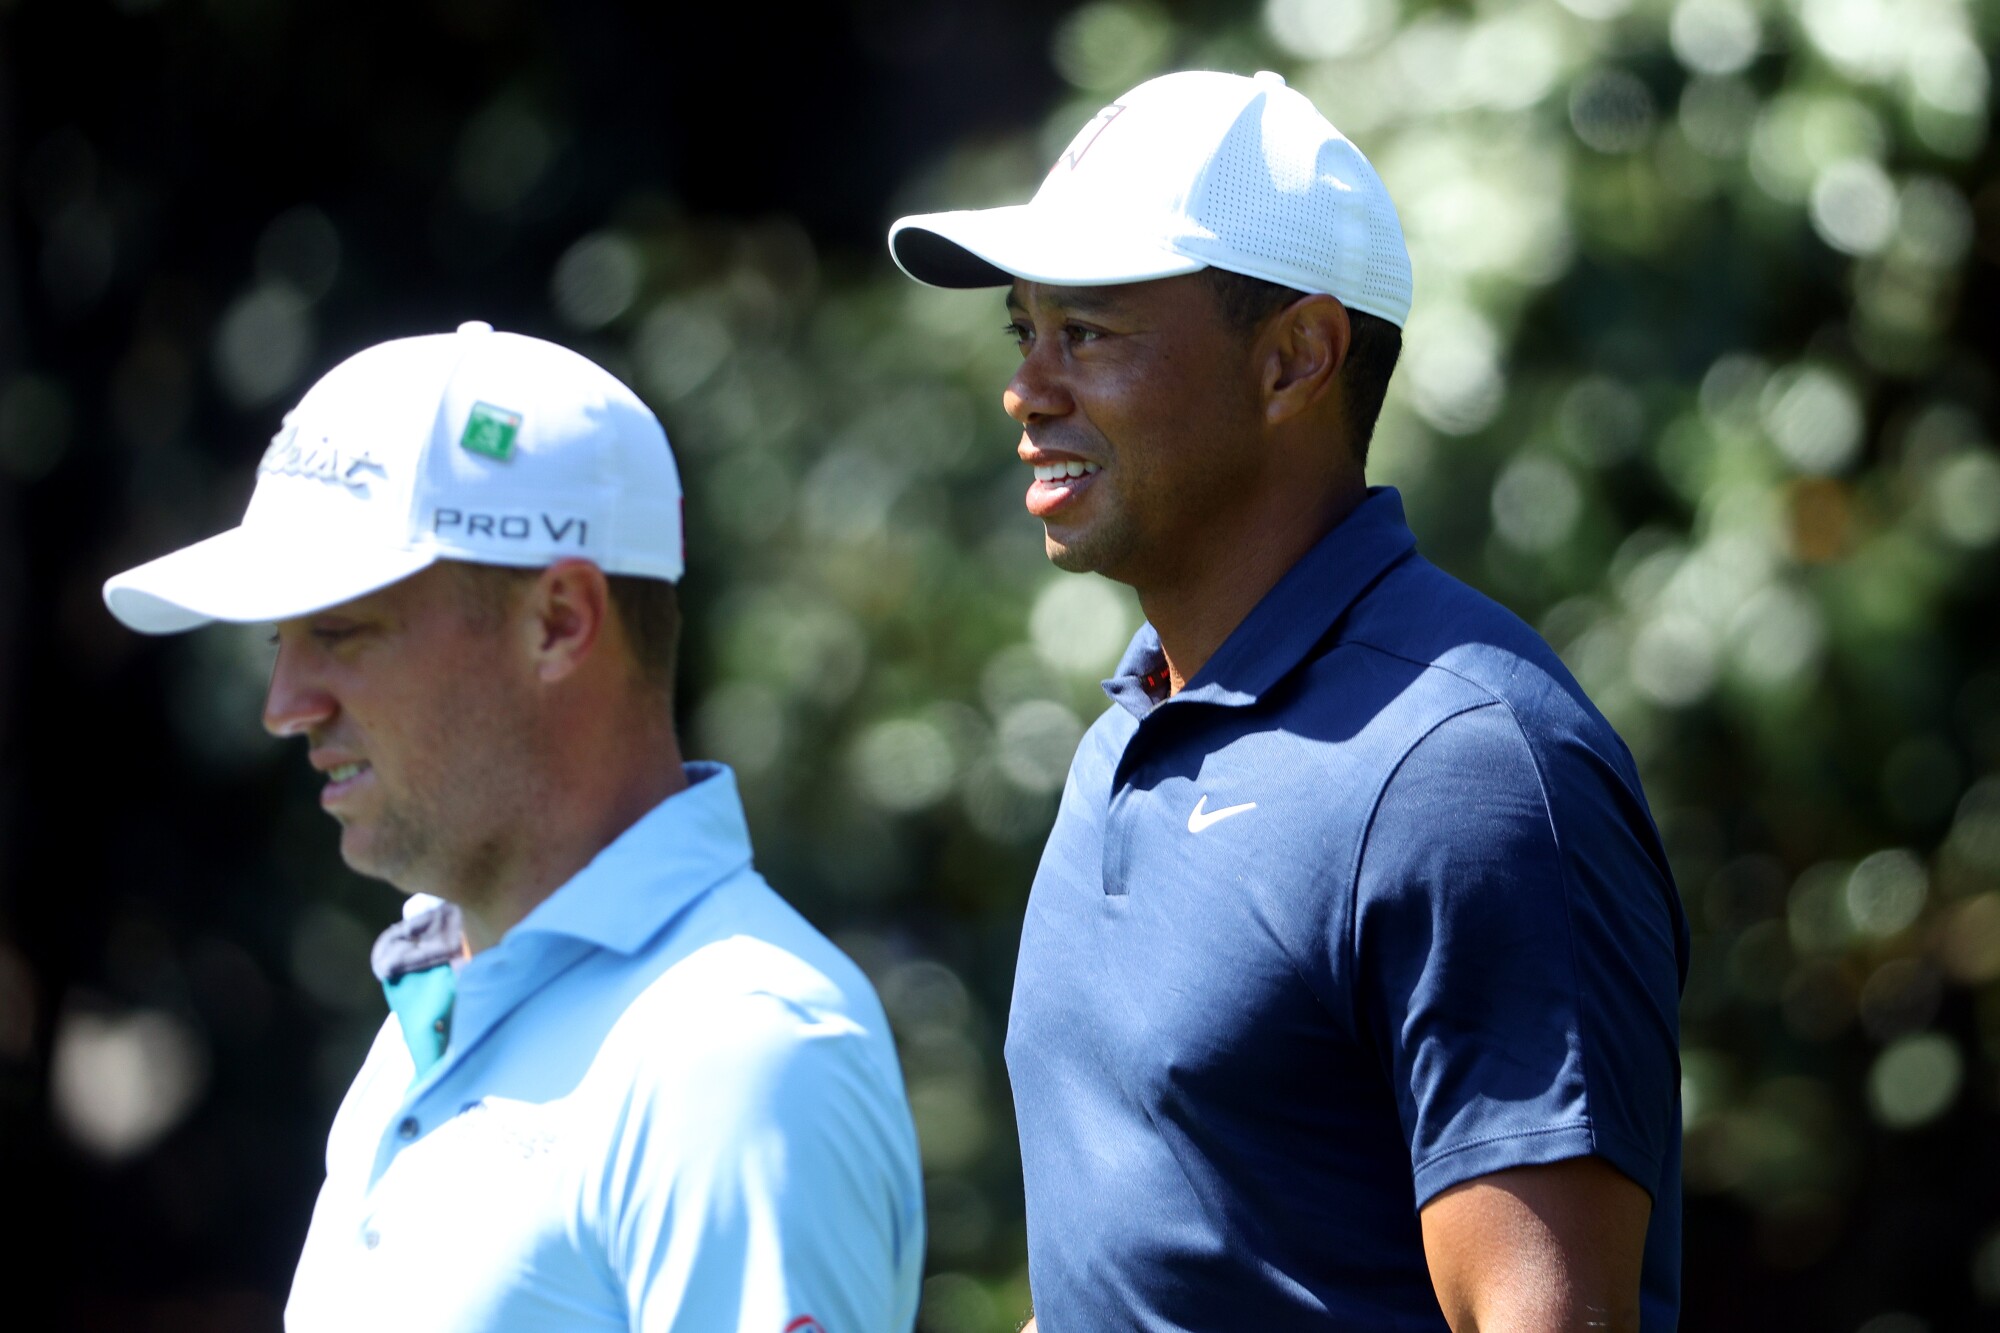 Justin Thomas and Tiger Woods, both wearing caps